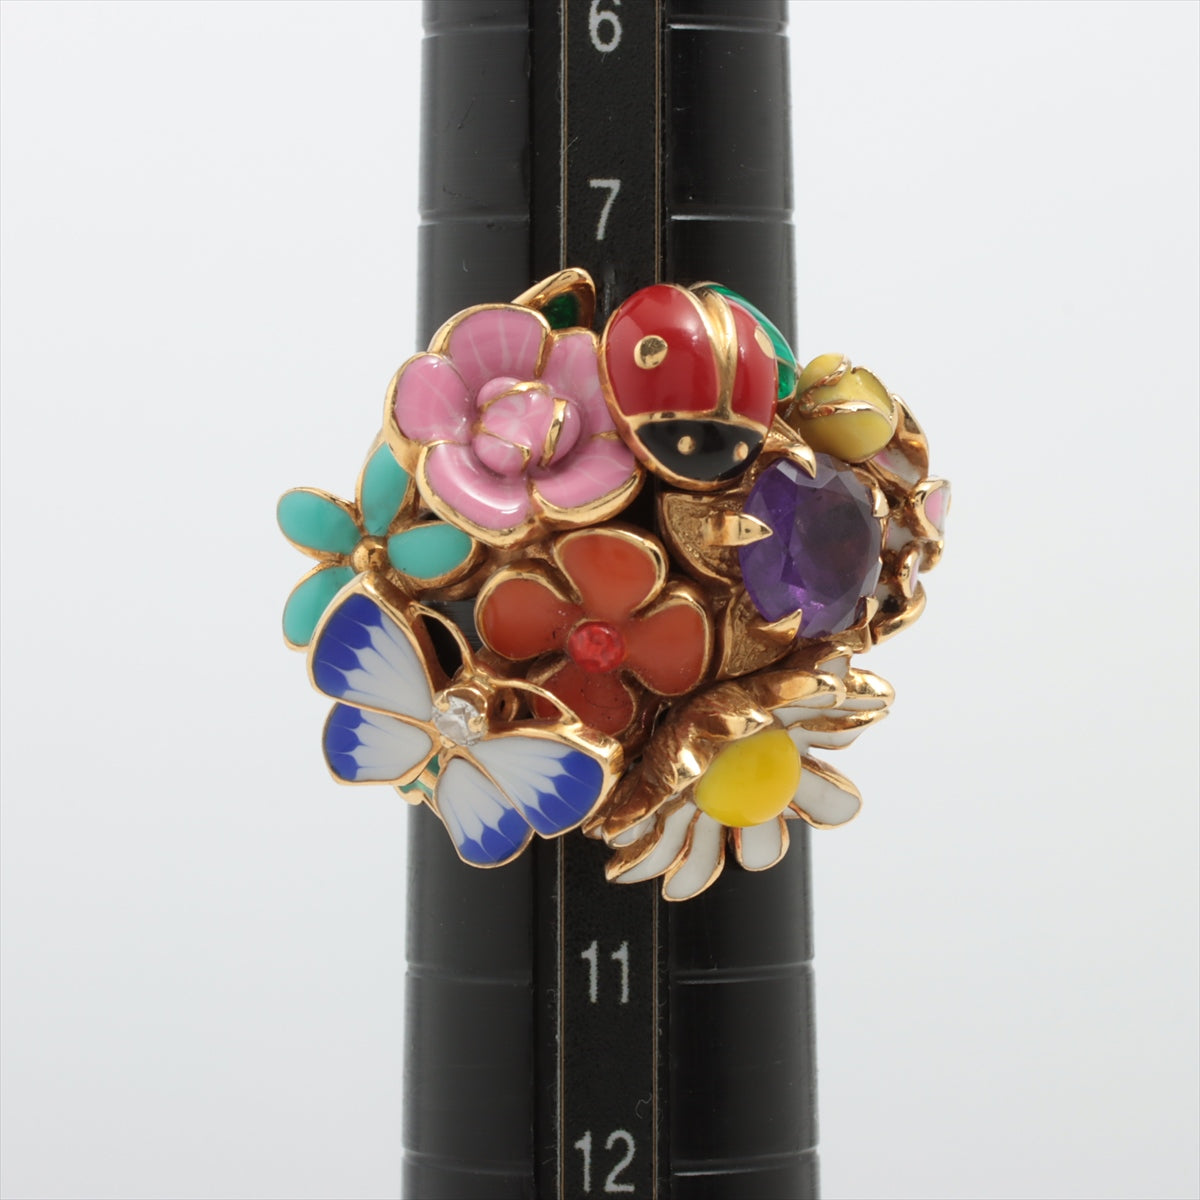 Christian Dior Diorette Multicolor diamond rings 750(YG) 22.1g 49